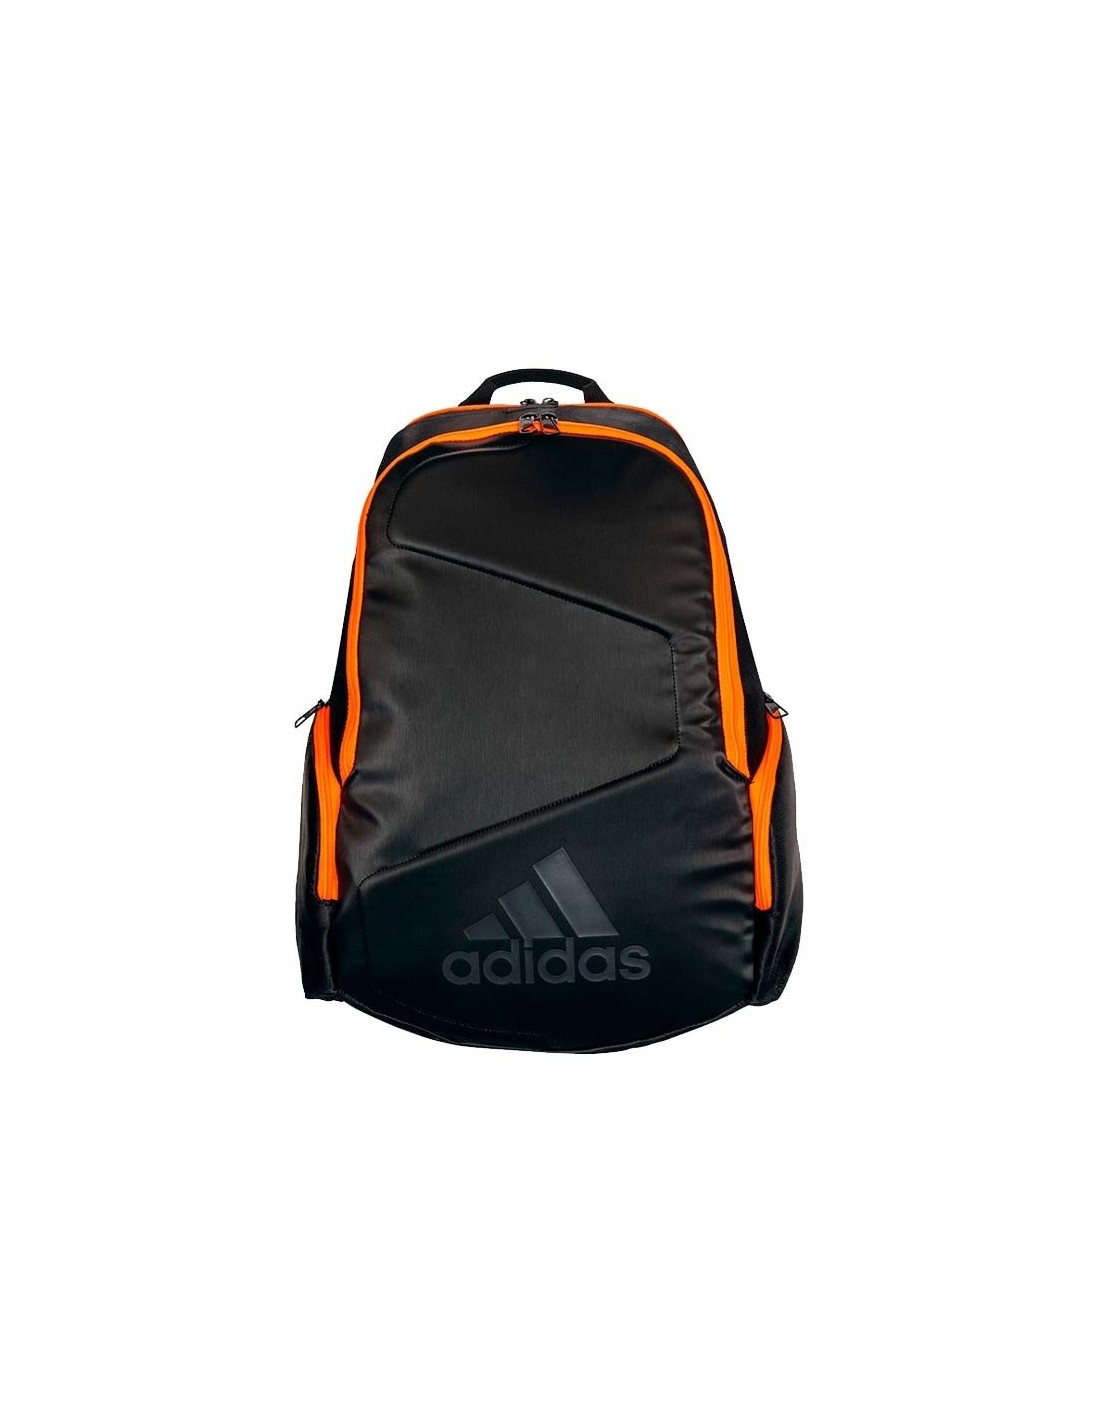 Buena voluntad arrendamiento ignorancia Adidas Pro Tour 2.0 Orange Backpack | ADIDAS racket bags | Time2Pad...